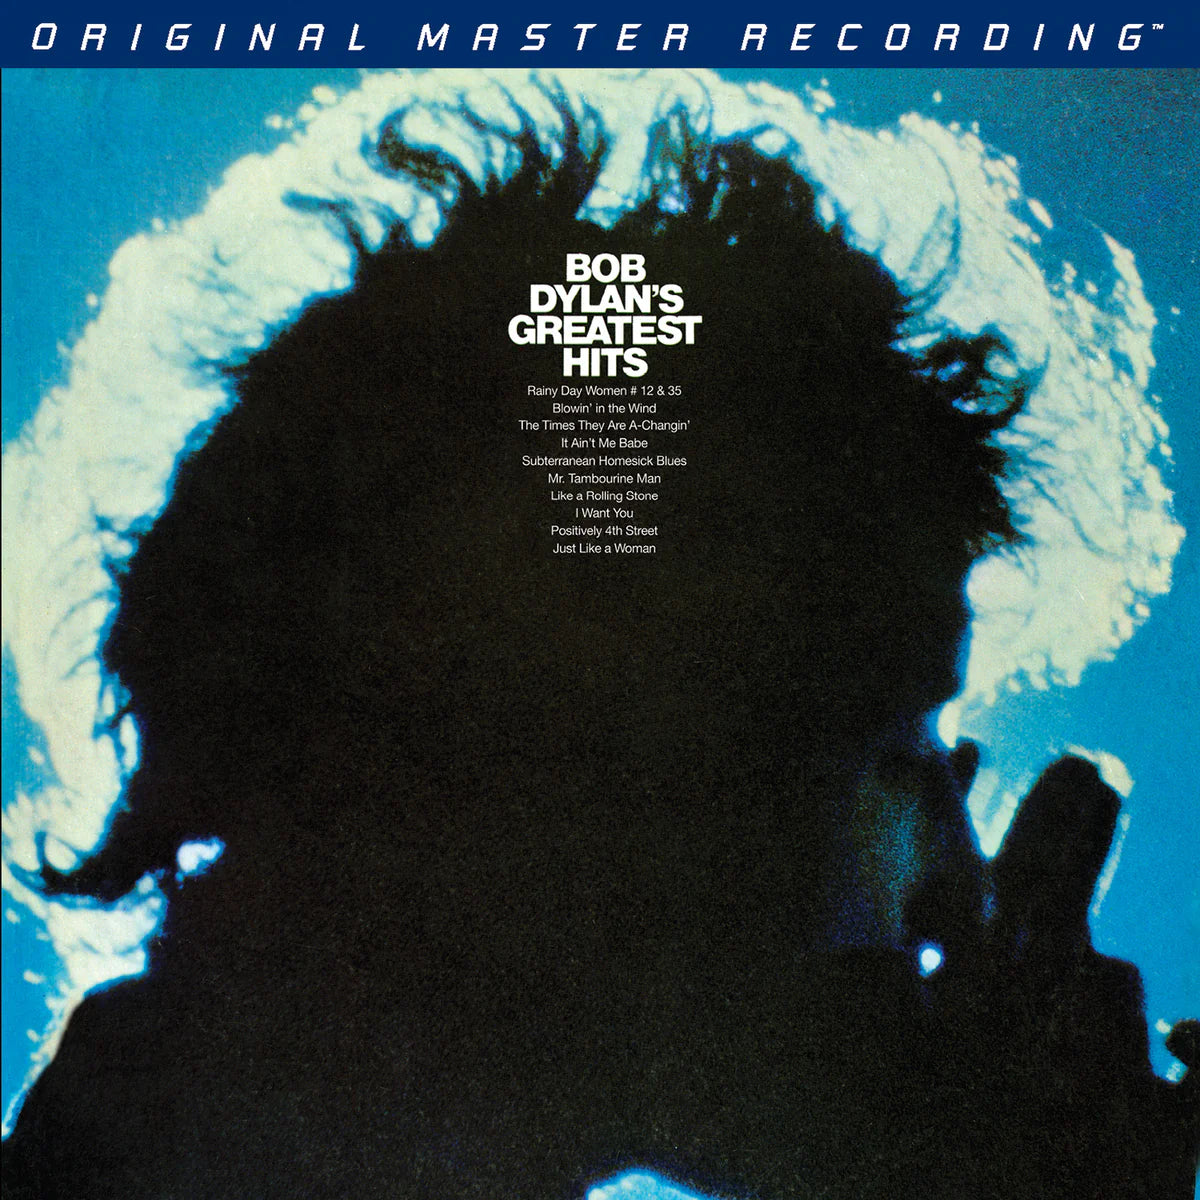 MFSL2-417　2x　Fidelity　Bob　Bob　Hill　Vinyl　Greatest　Dylan's　Mobile　Dylan　Hat　LP　45RPM　MoFi　Hits,　Gallery